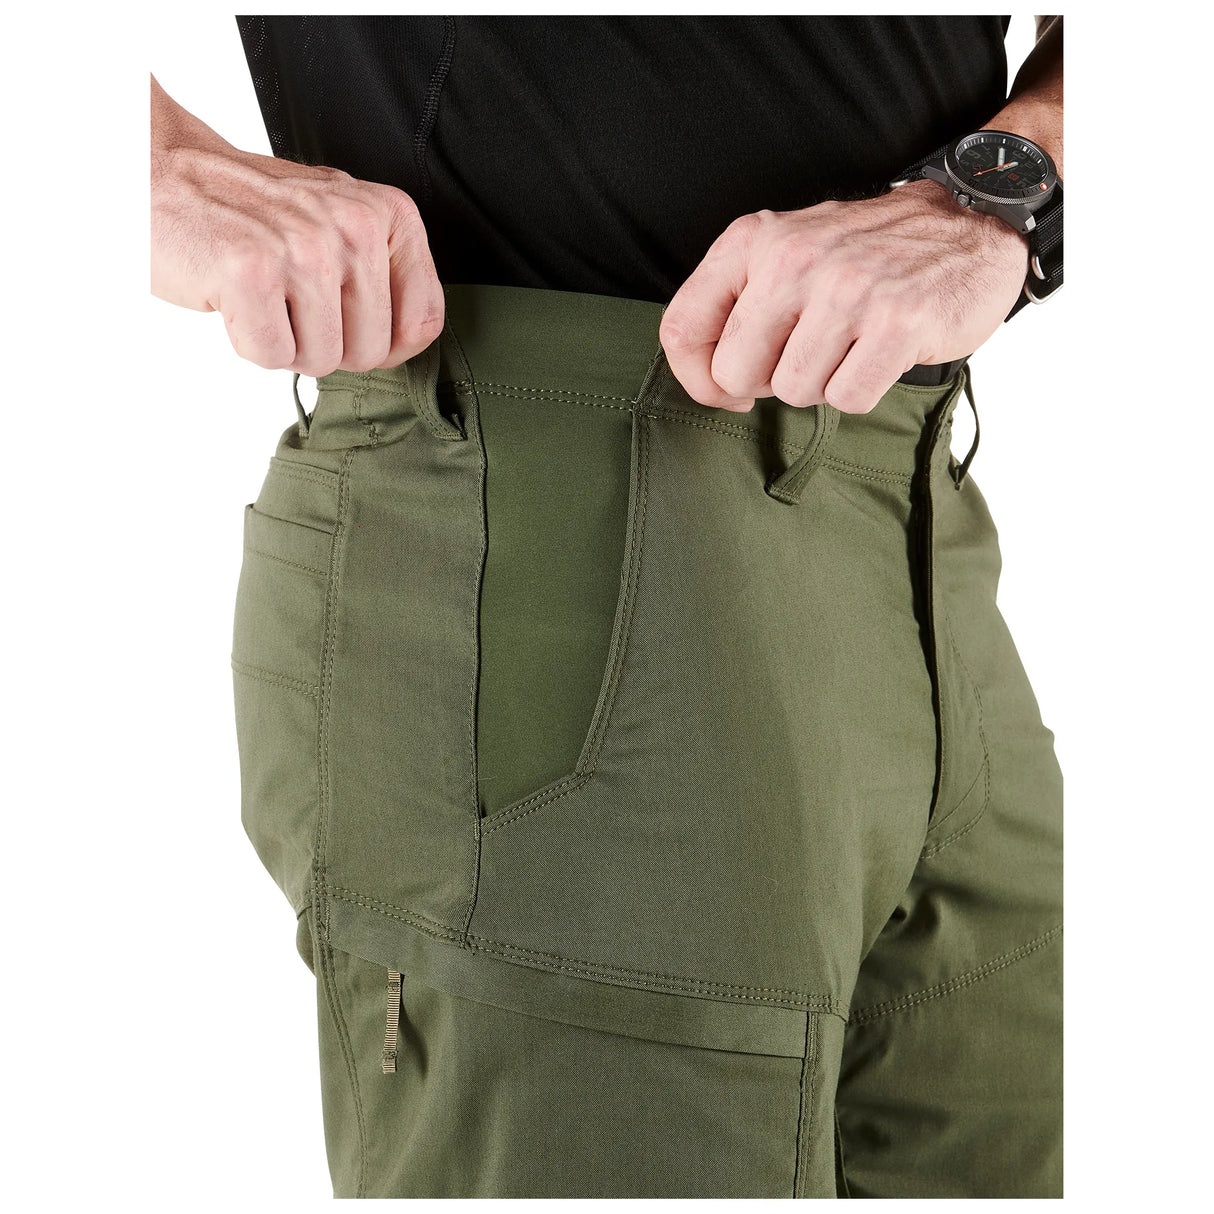 Hidden Handcuff Key Pocket: Enhances security for law enforcement professionals.